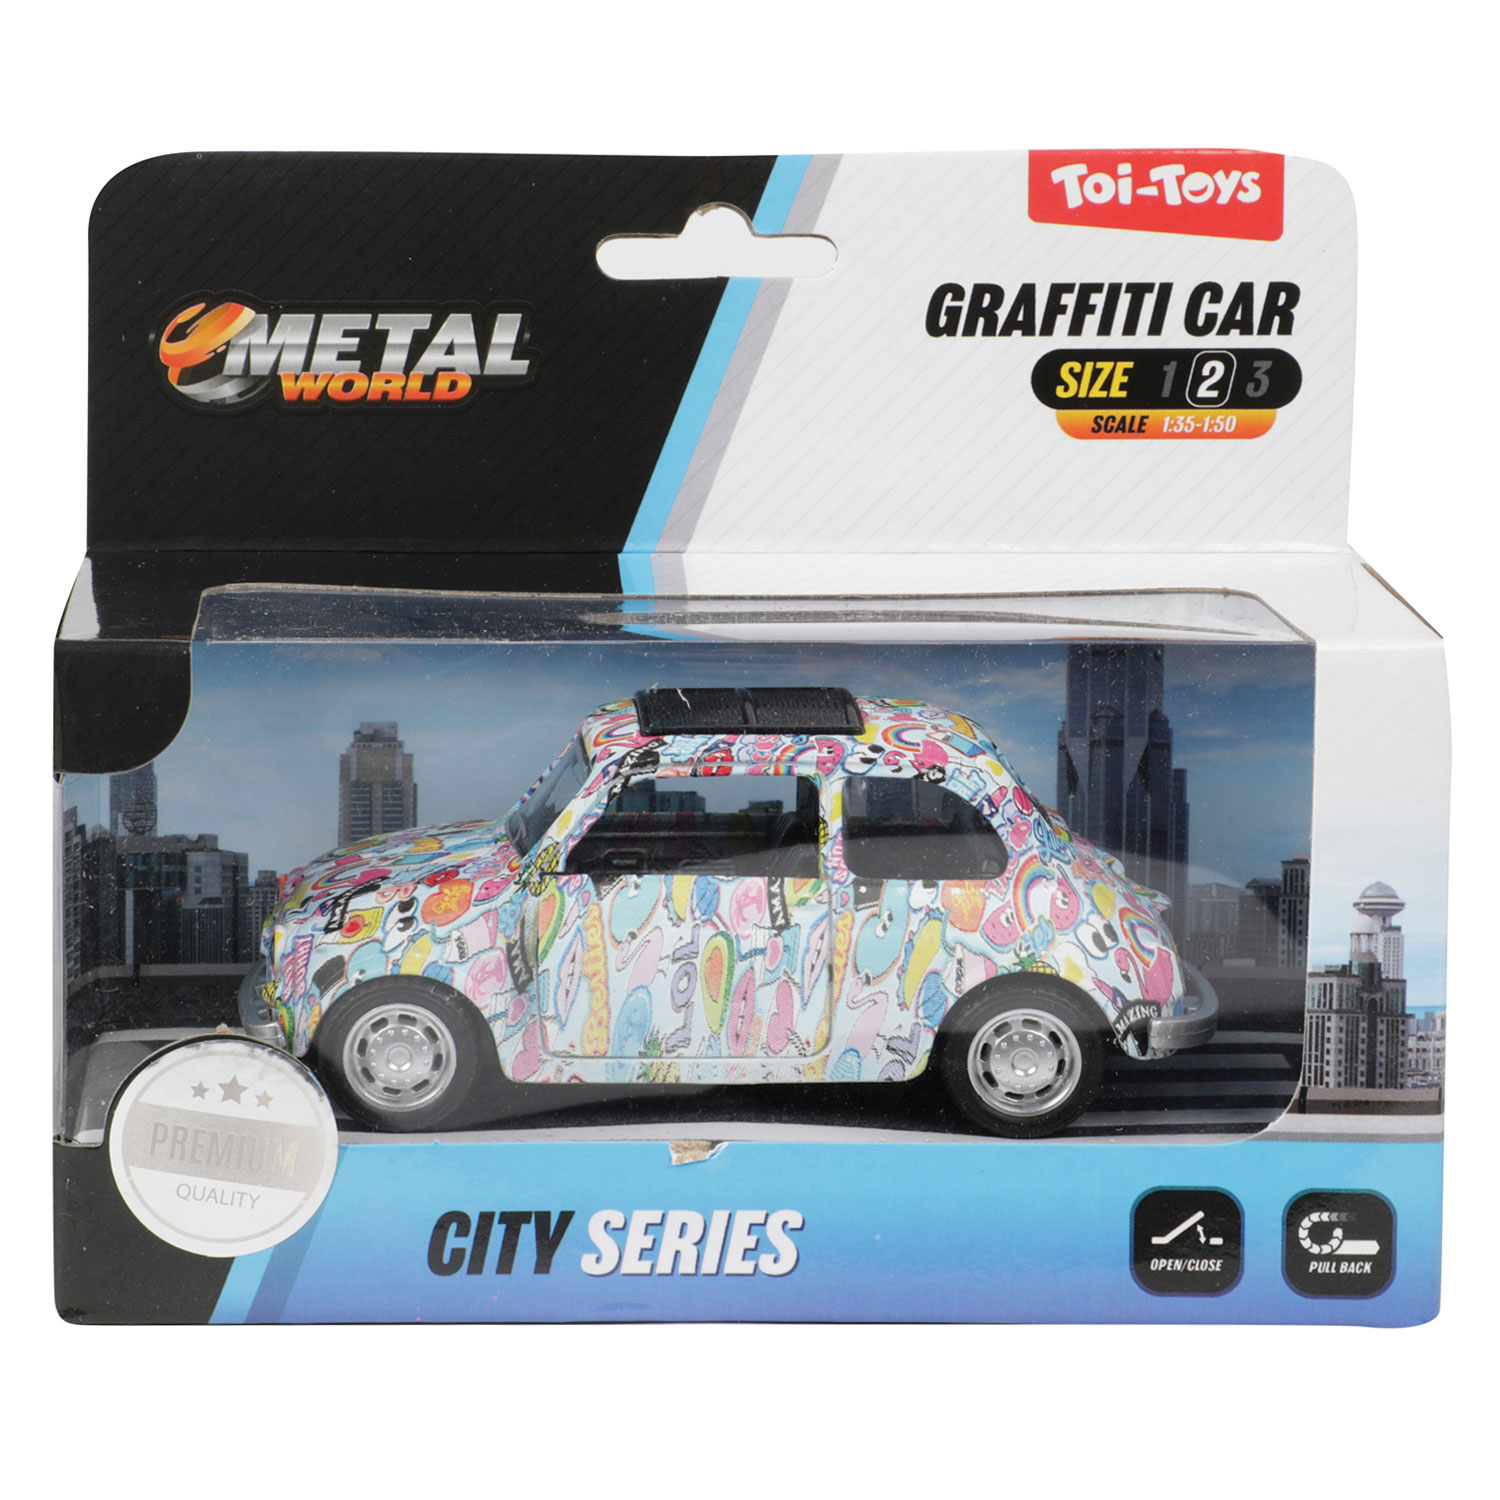 Kaufen Sie Metall-Pullback-Graffiti-Auto online?